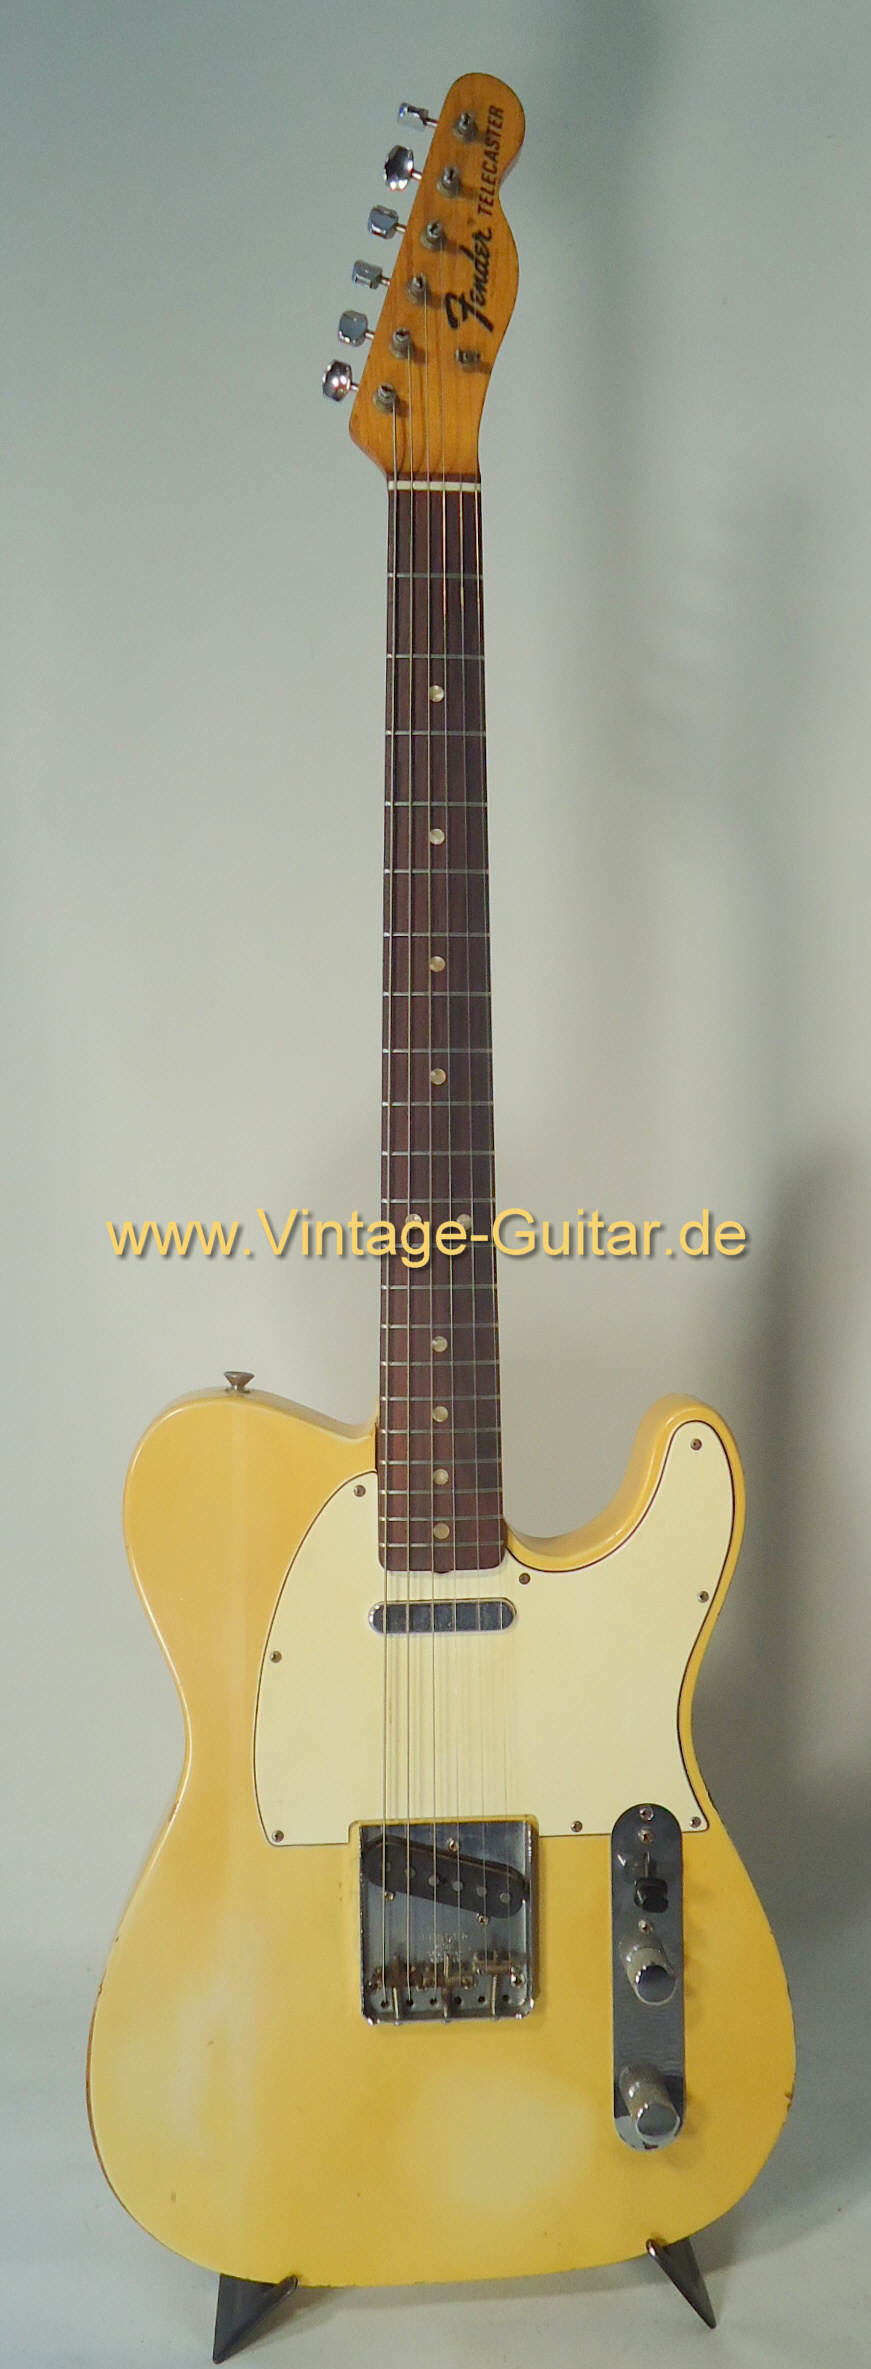 Fender-Telecaster-1967-blond-a.jpg